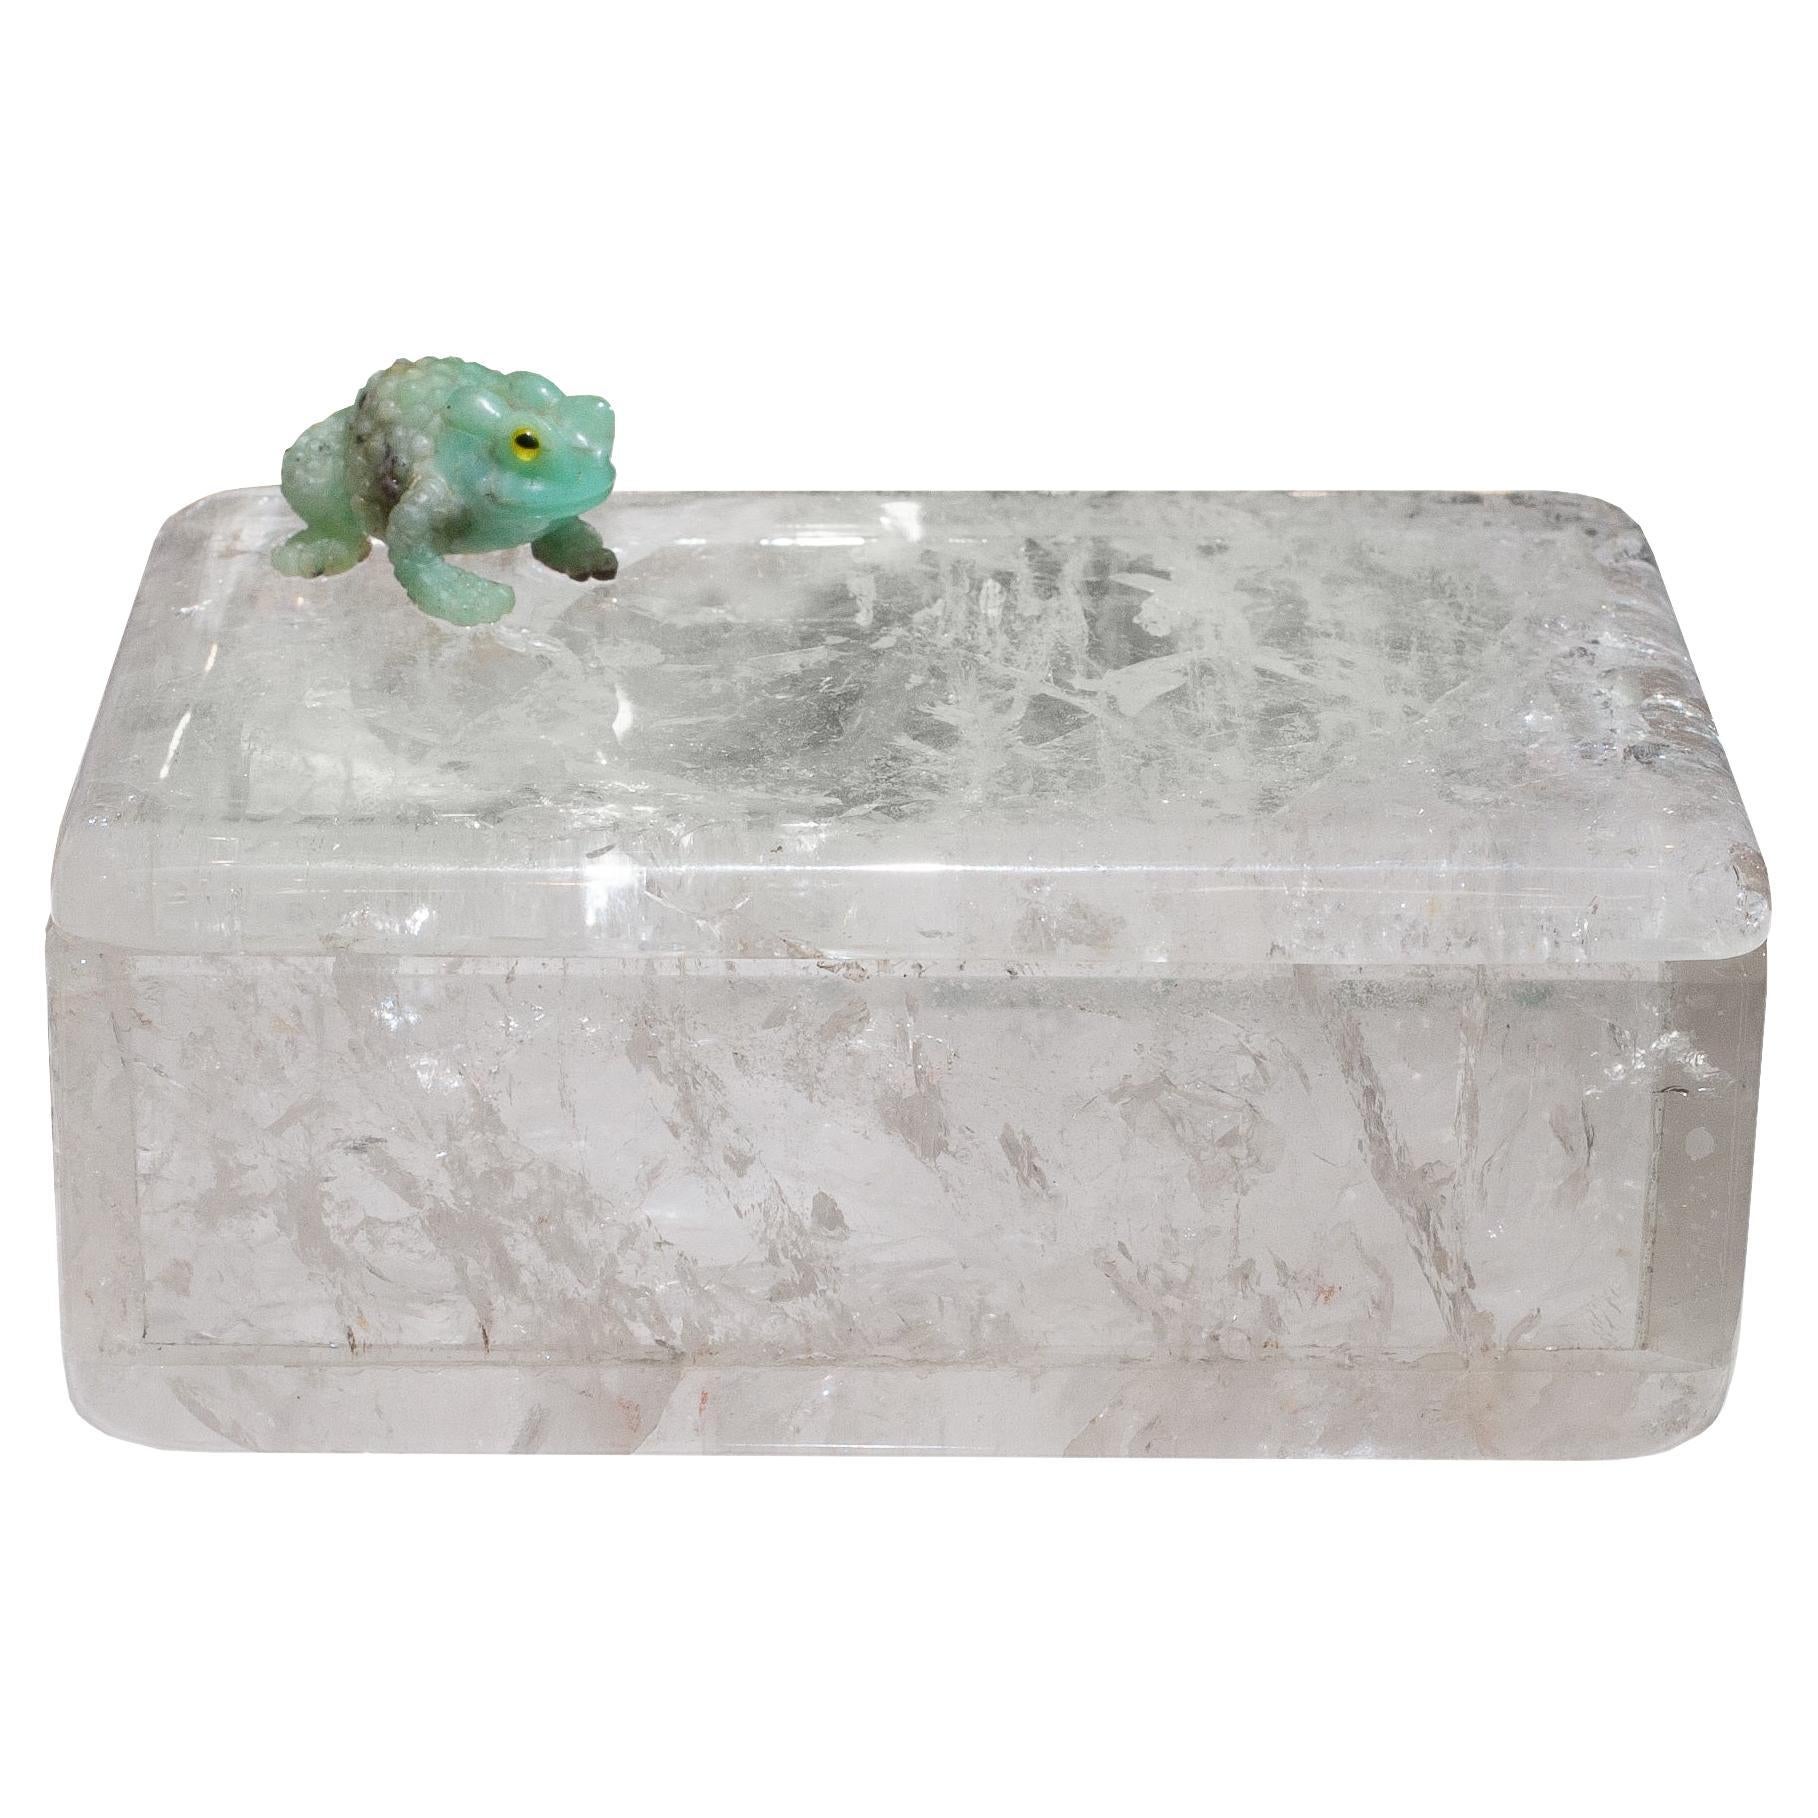 Studio Maison Nurita Large Clear Quartz / Rock Crystal Box with Aventurine Frog